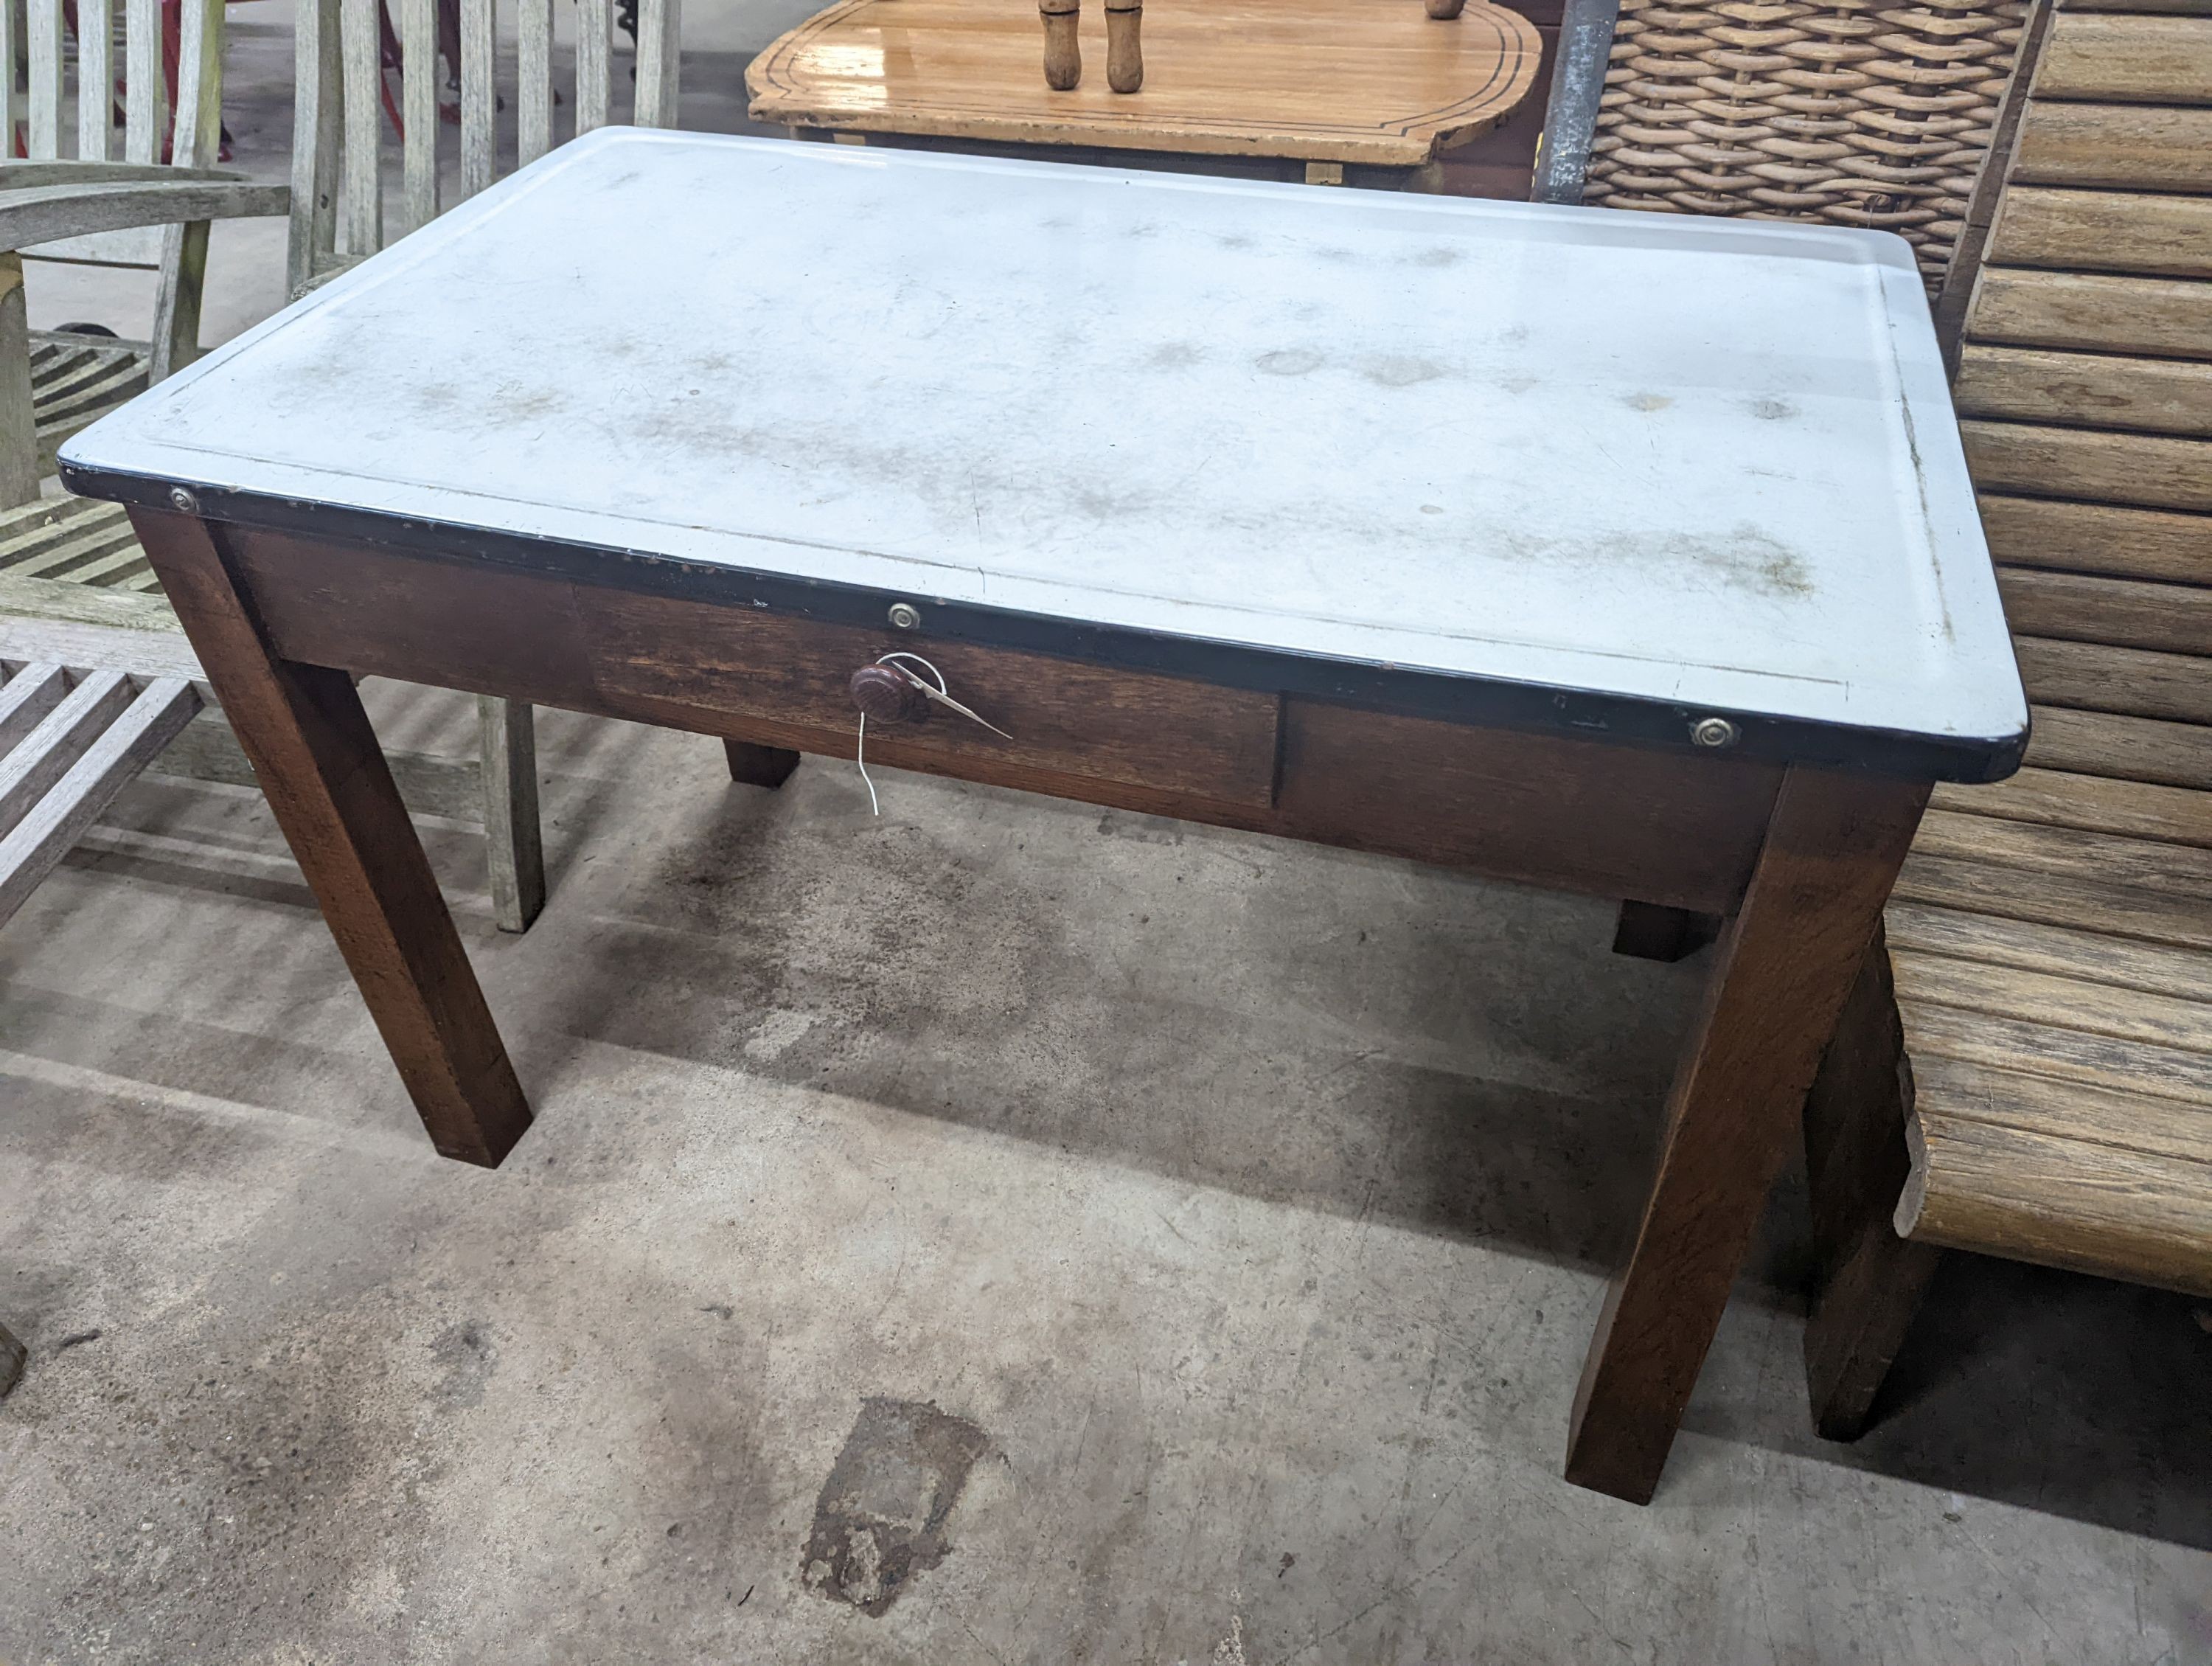 An enamel top kitchen table, width 105cm, depth 63cm, height 68cm